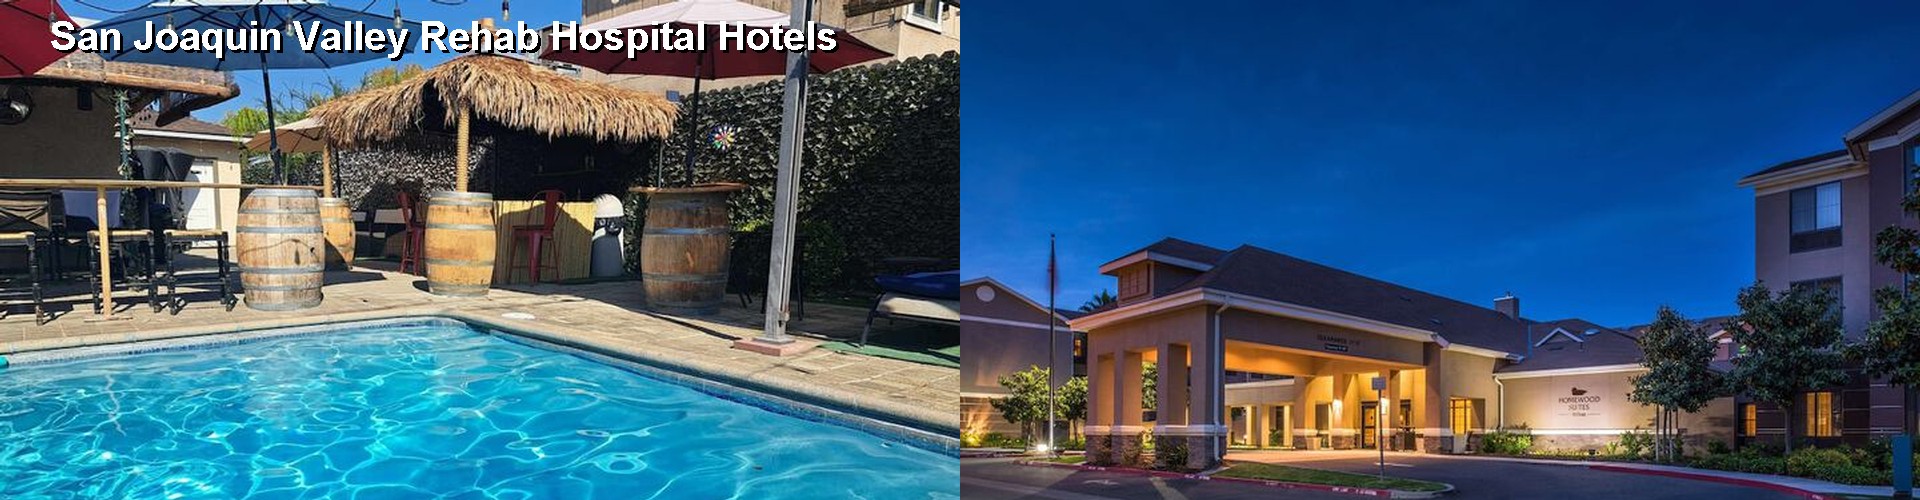 5 Best Hotels near San Joaquin Valley Rehab Hospital